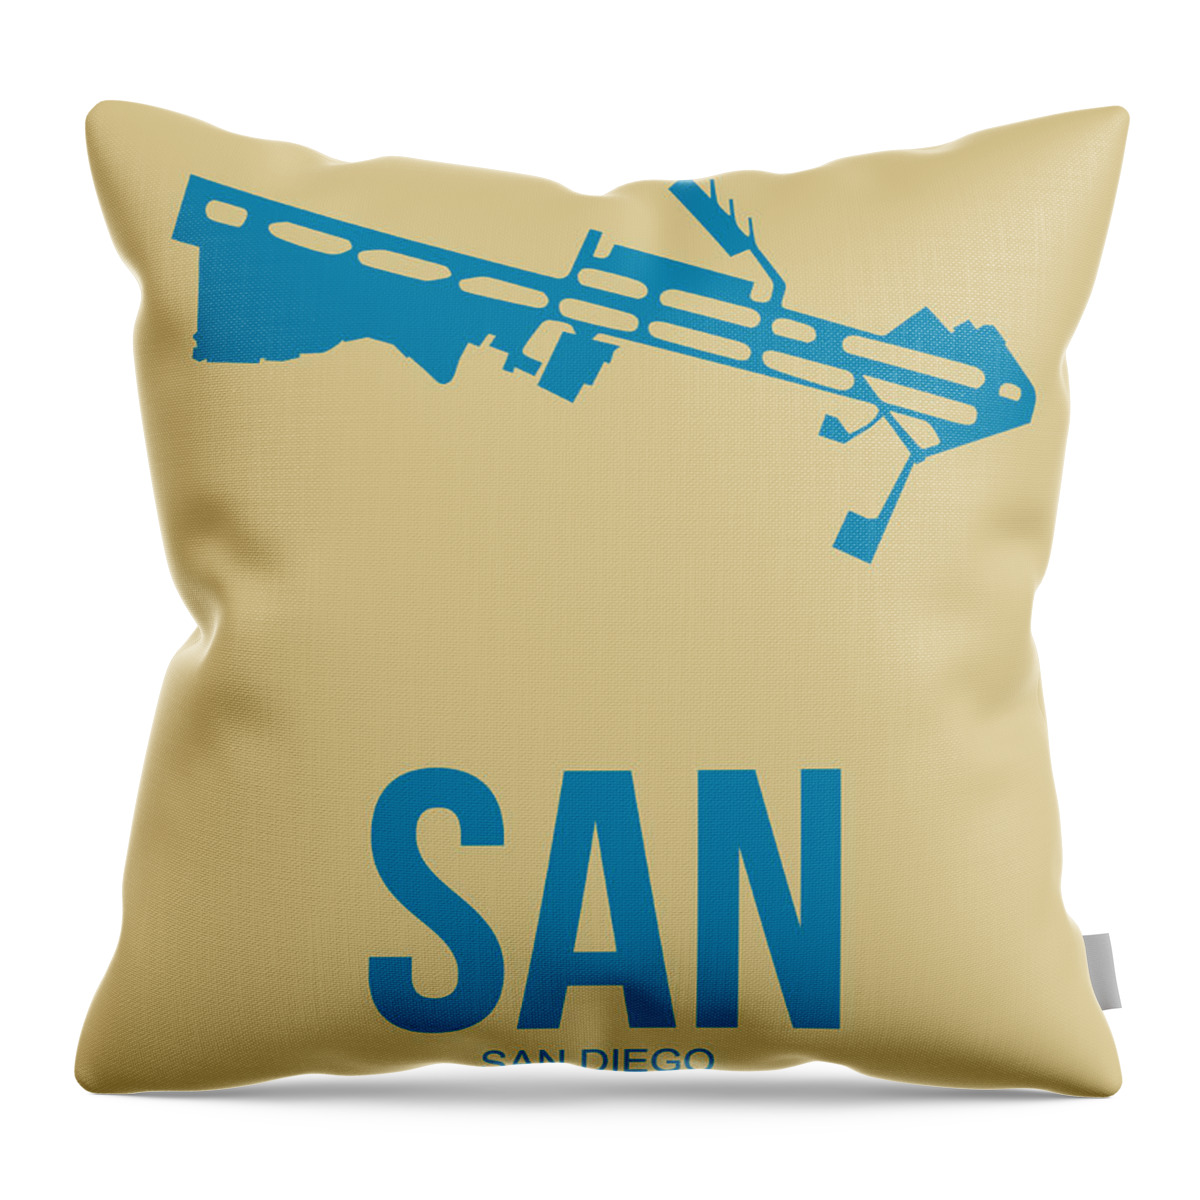 San Diego Throw Pillow featuring the digital art SAN San Diego Airport Poster 3 by Naxart Studio